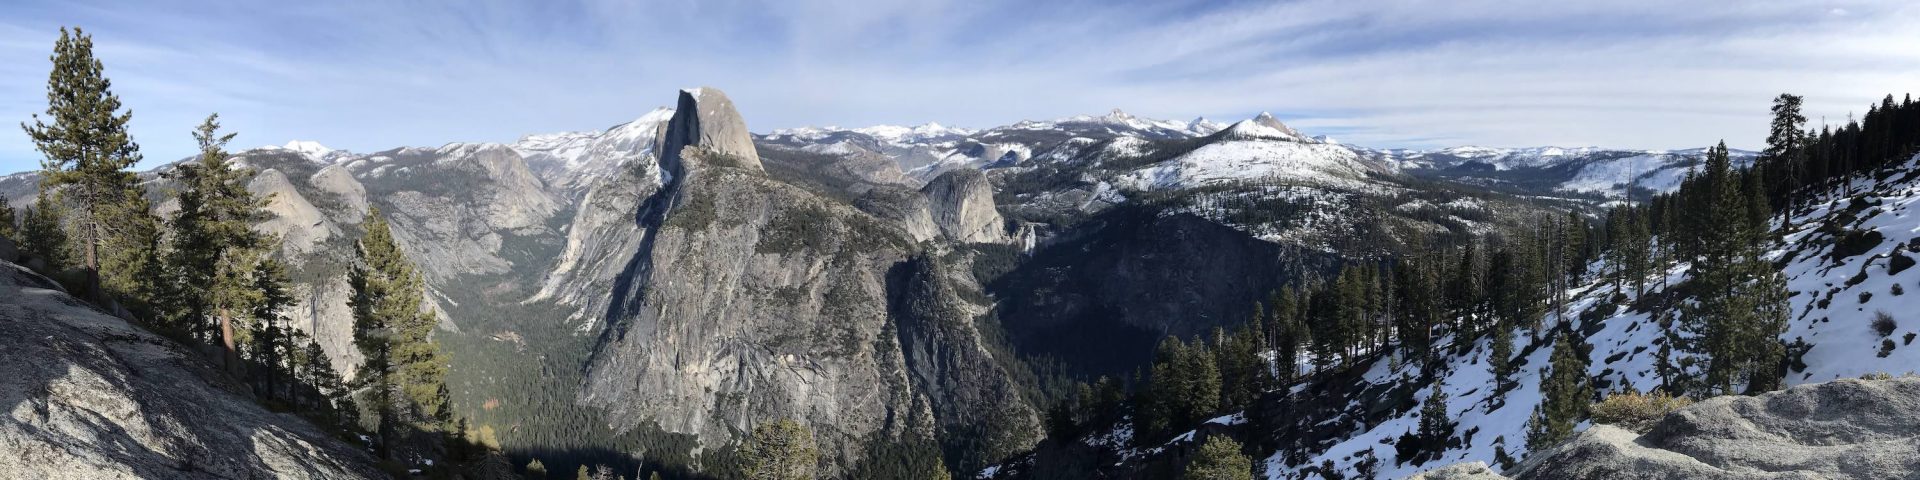 Yosemite Panarama Trail Loop